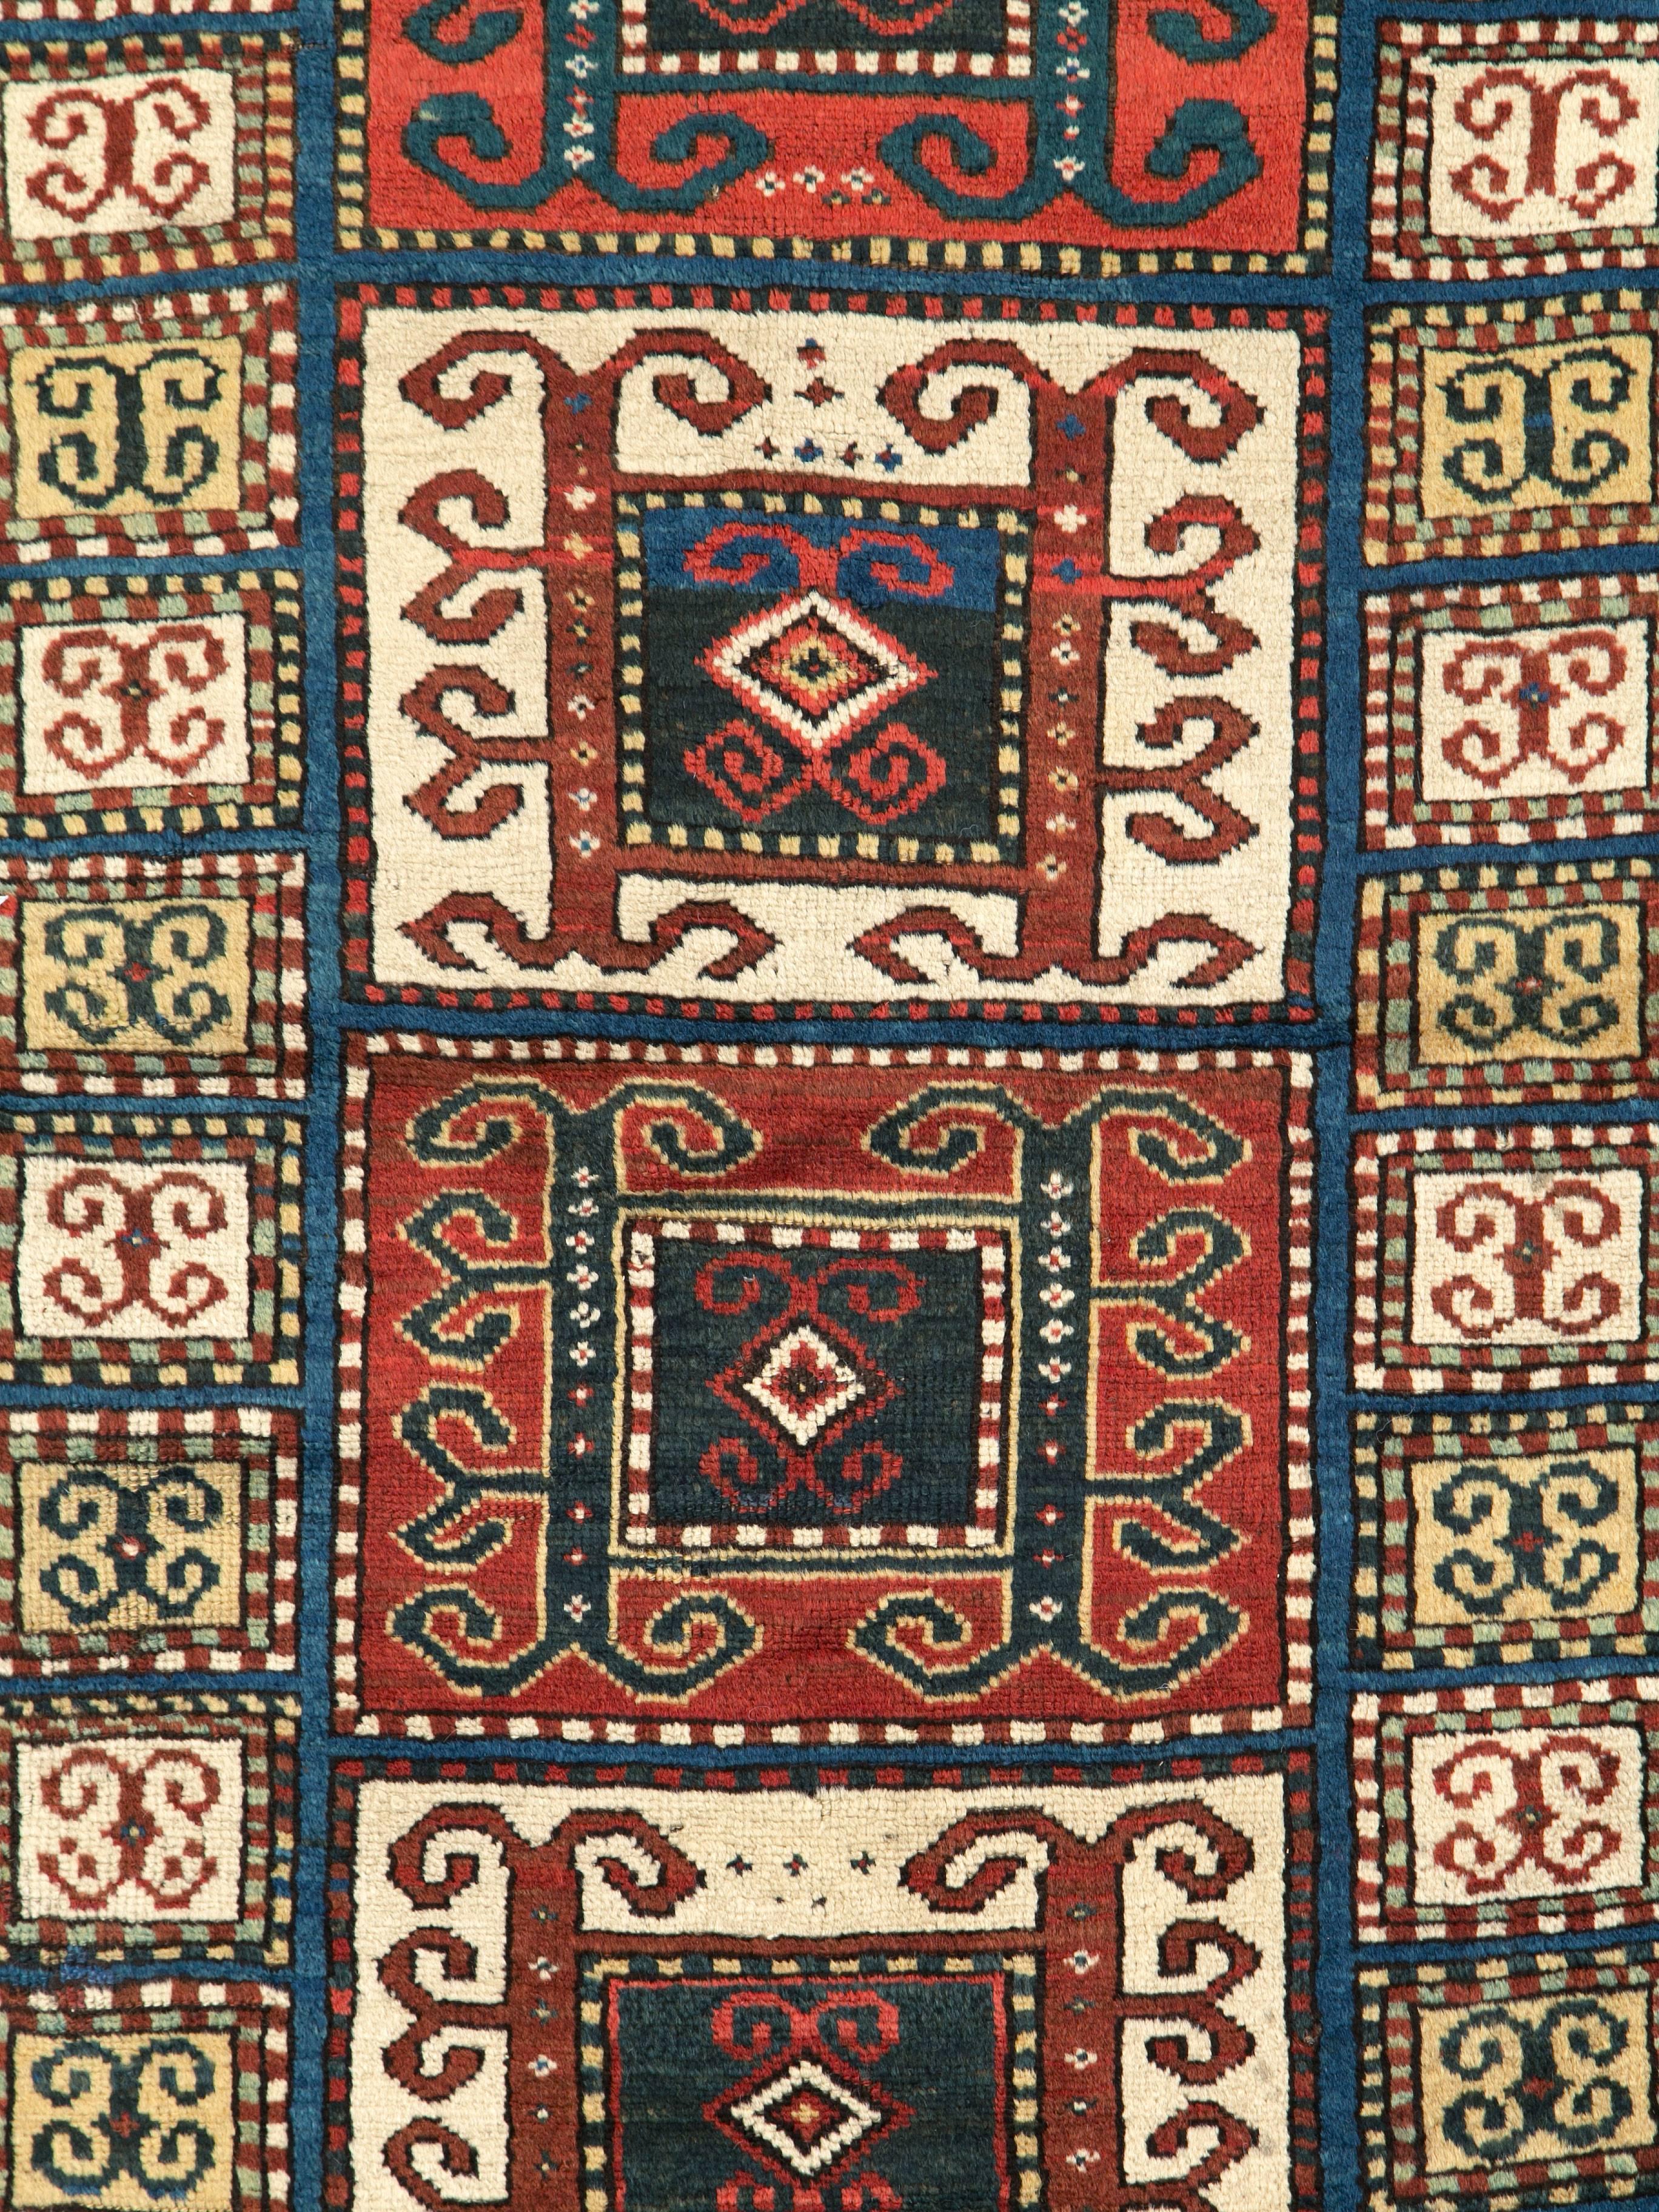 An early 20th century Kazak rug.